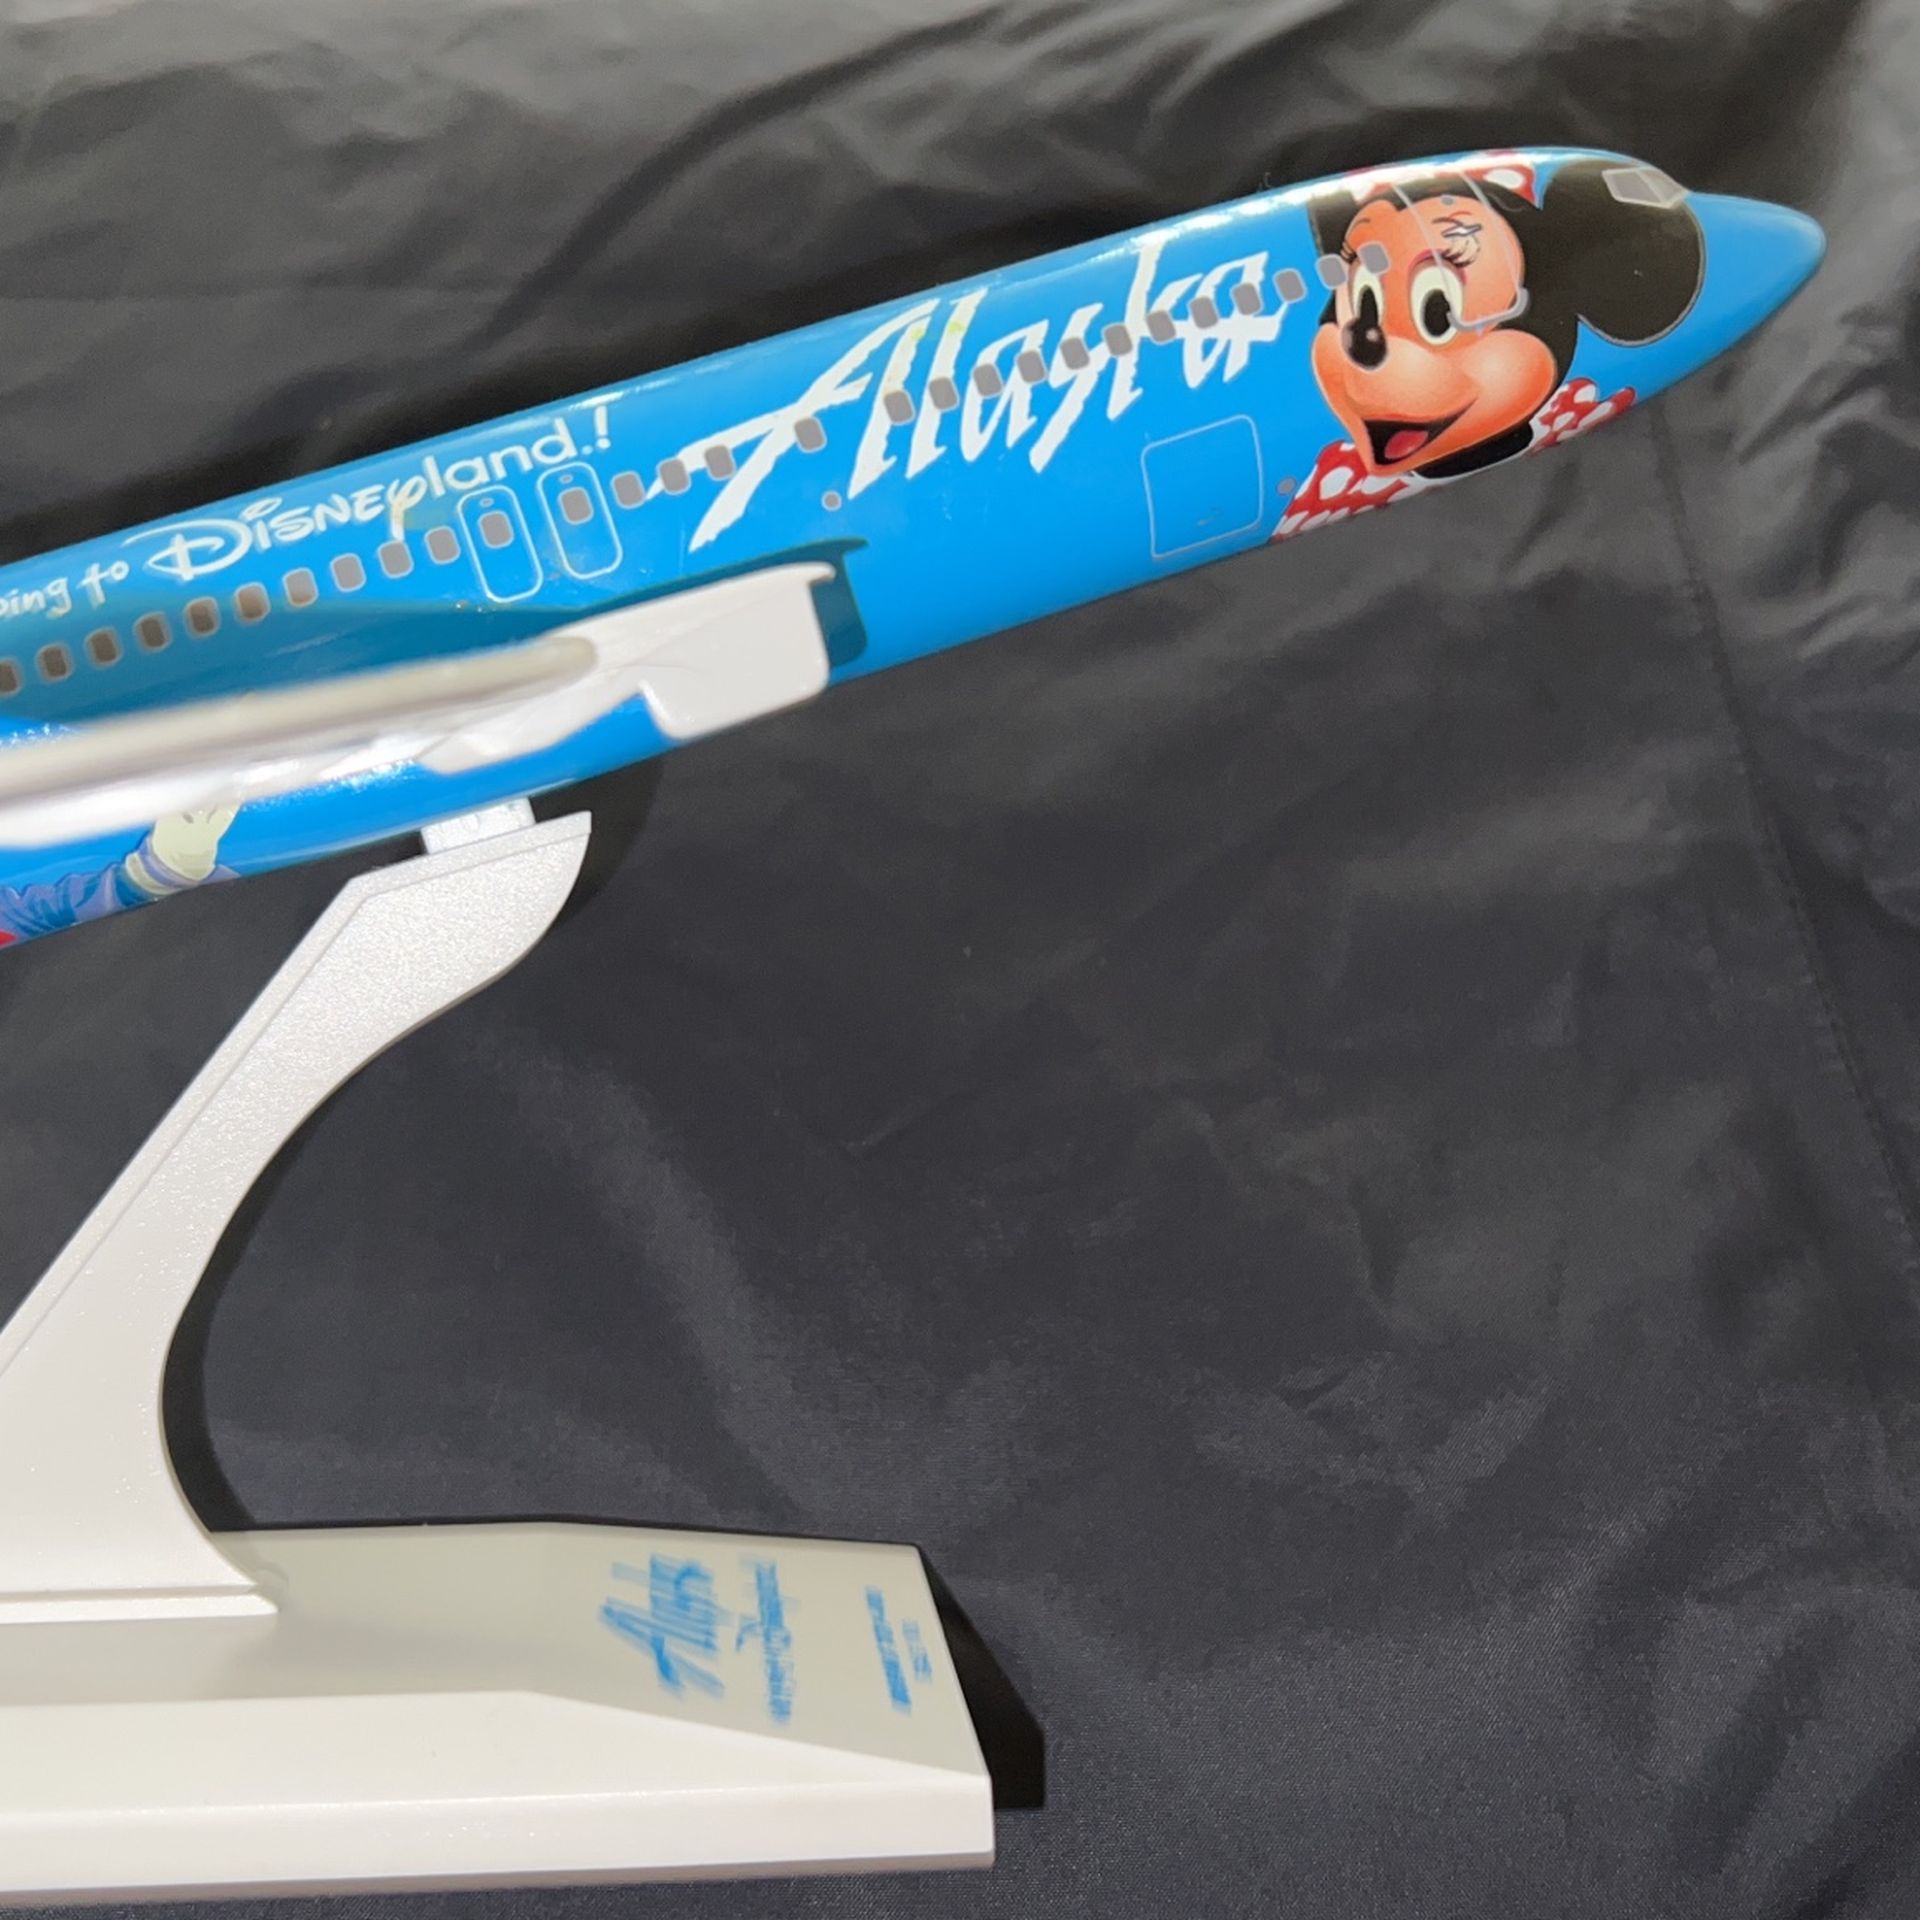 Disneyland Alaska Airlines Airplane